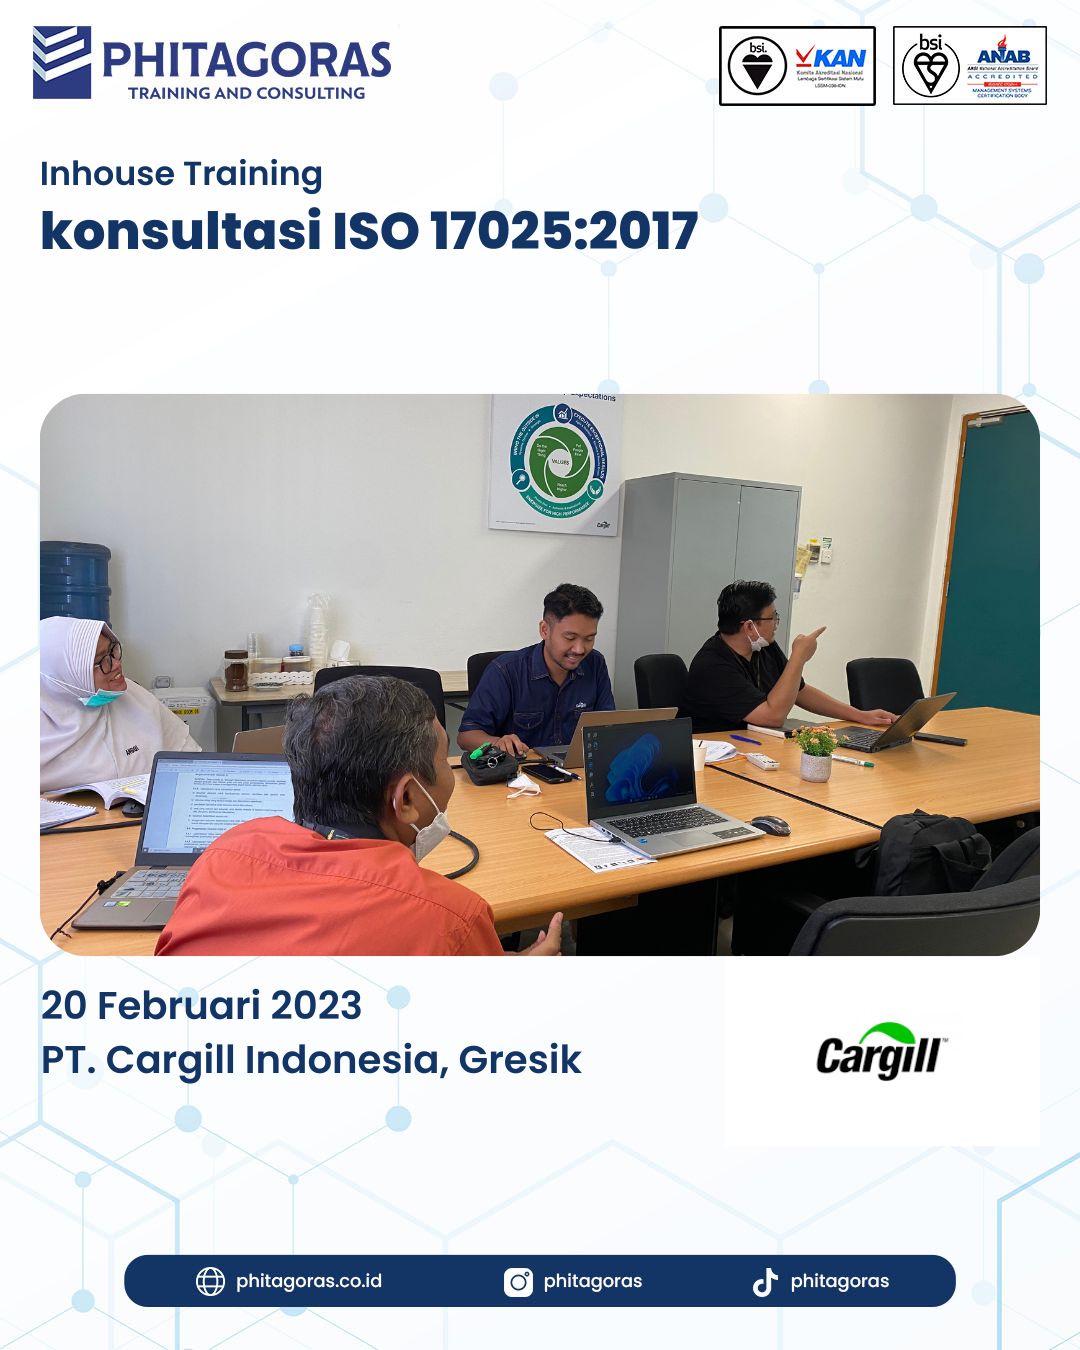 Inhouse Training konsultasi ISO 17025:2017